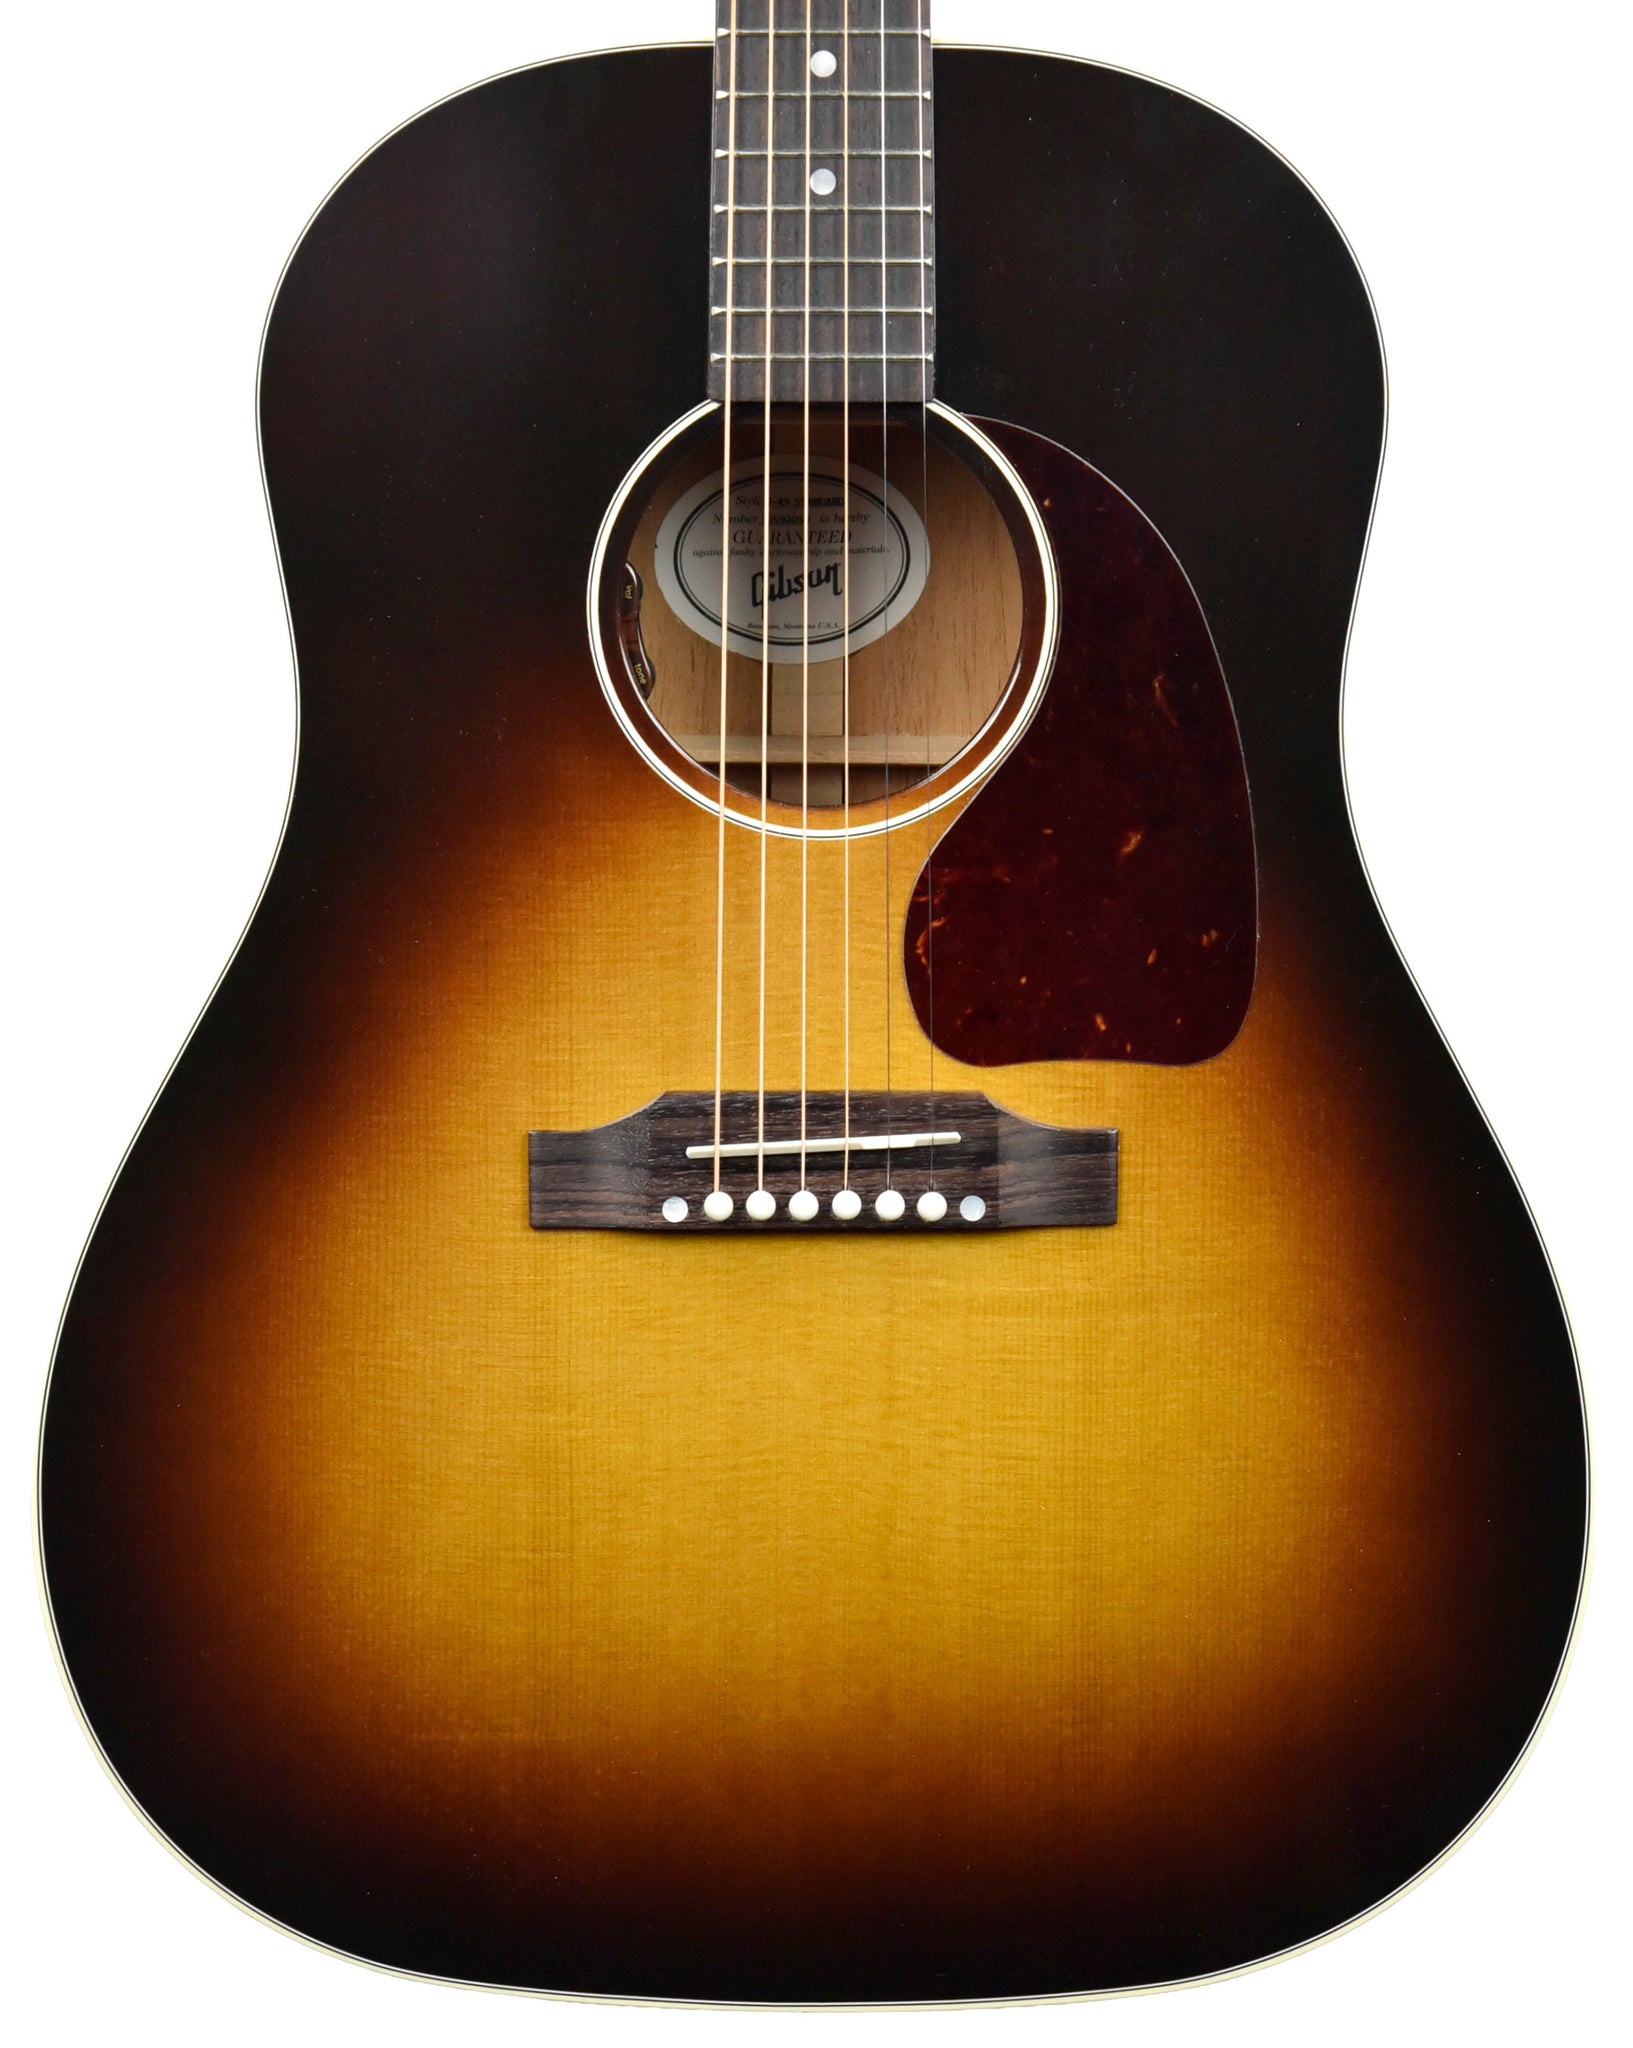 Gibson Acoustic J-45 Standard Acoustic Guitar in Vintage Sunburst